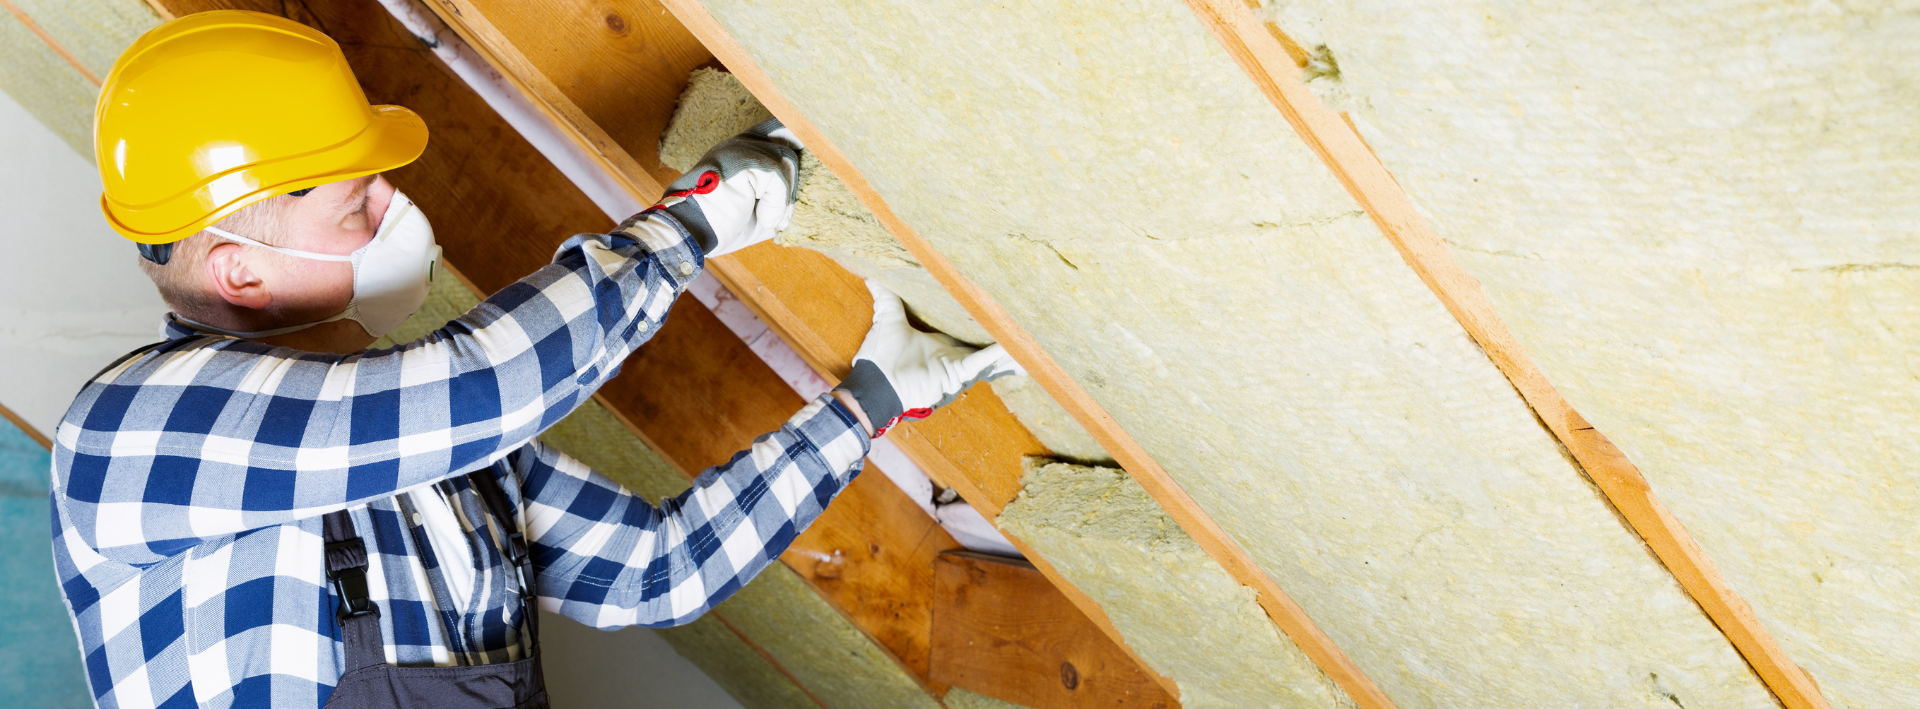 Benefits of attic insulation